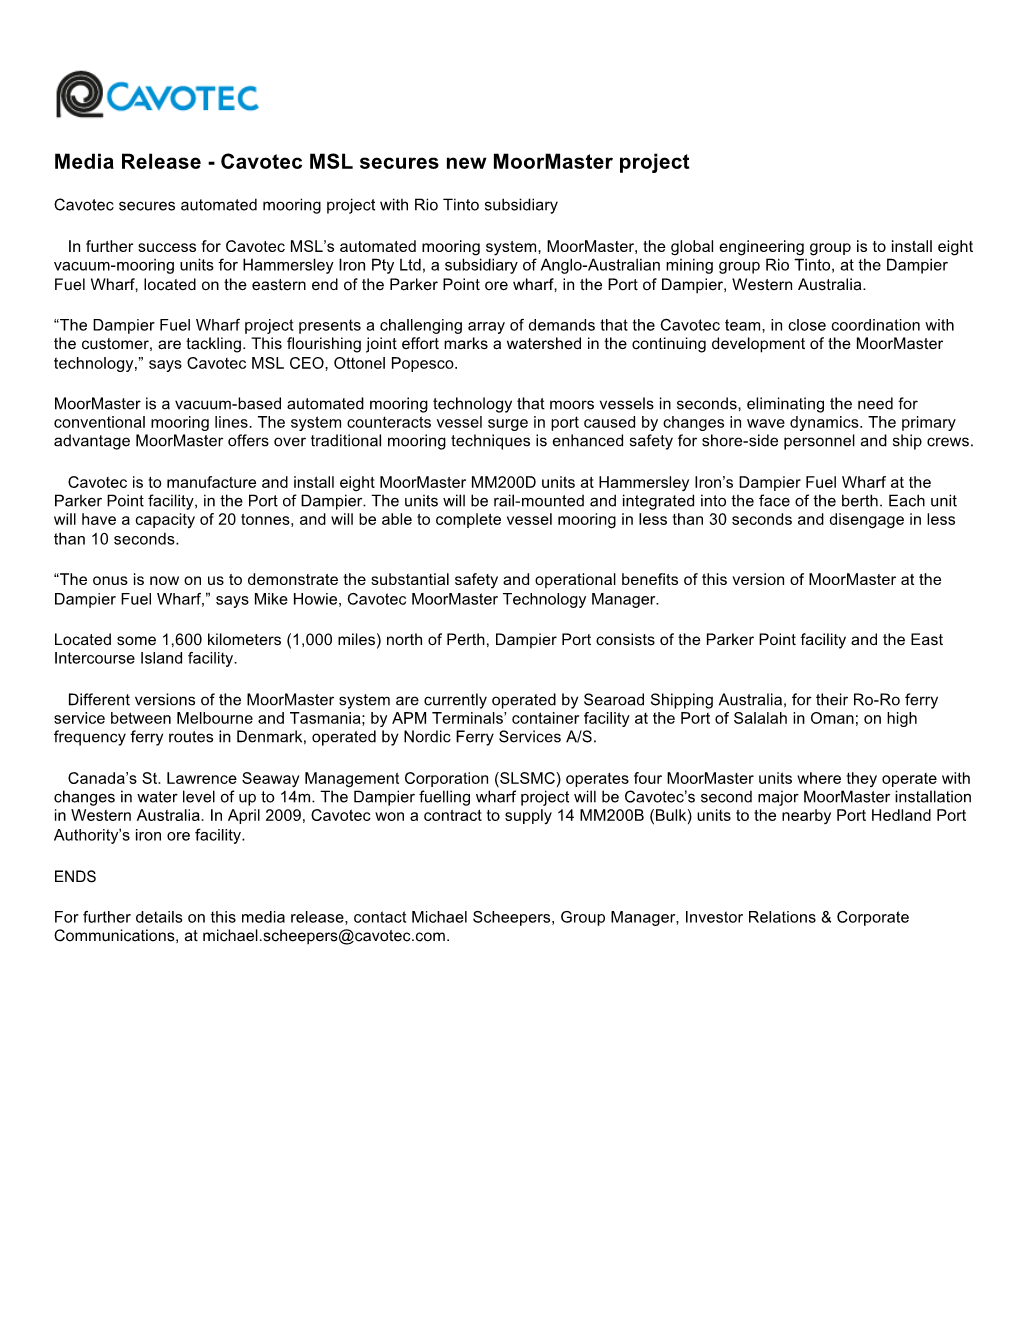 Media Release - Cavotec MSL Secures New Moormaster Project